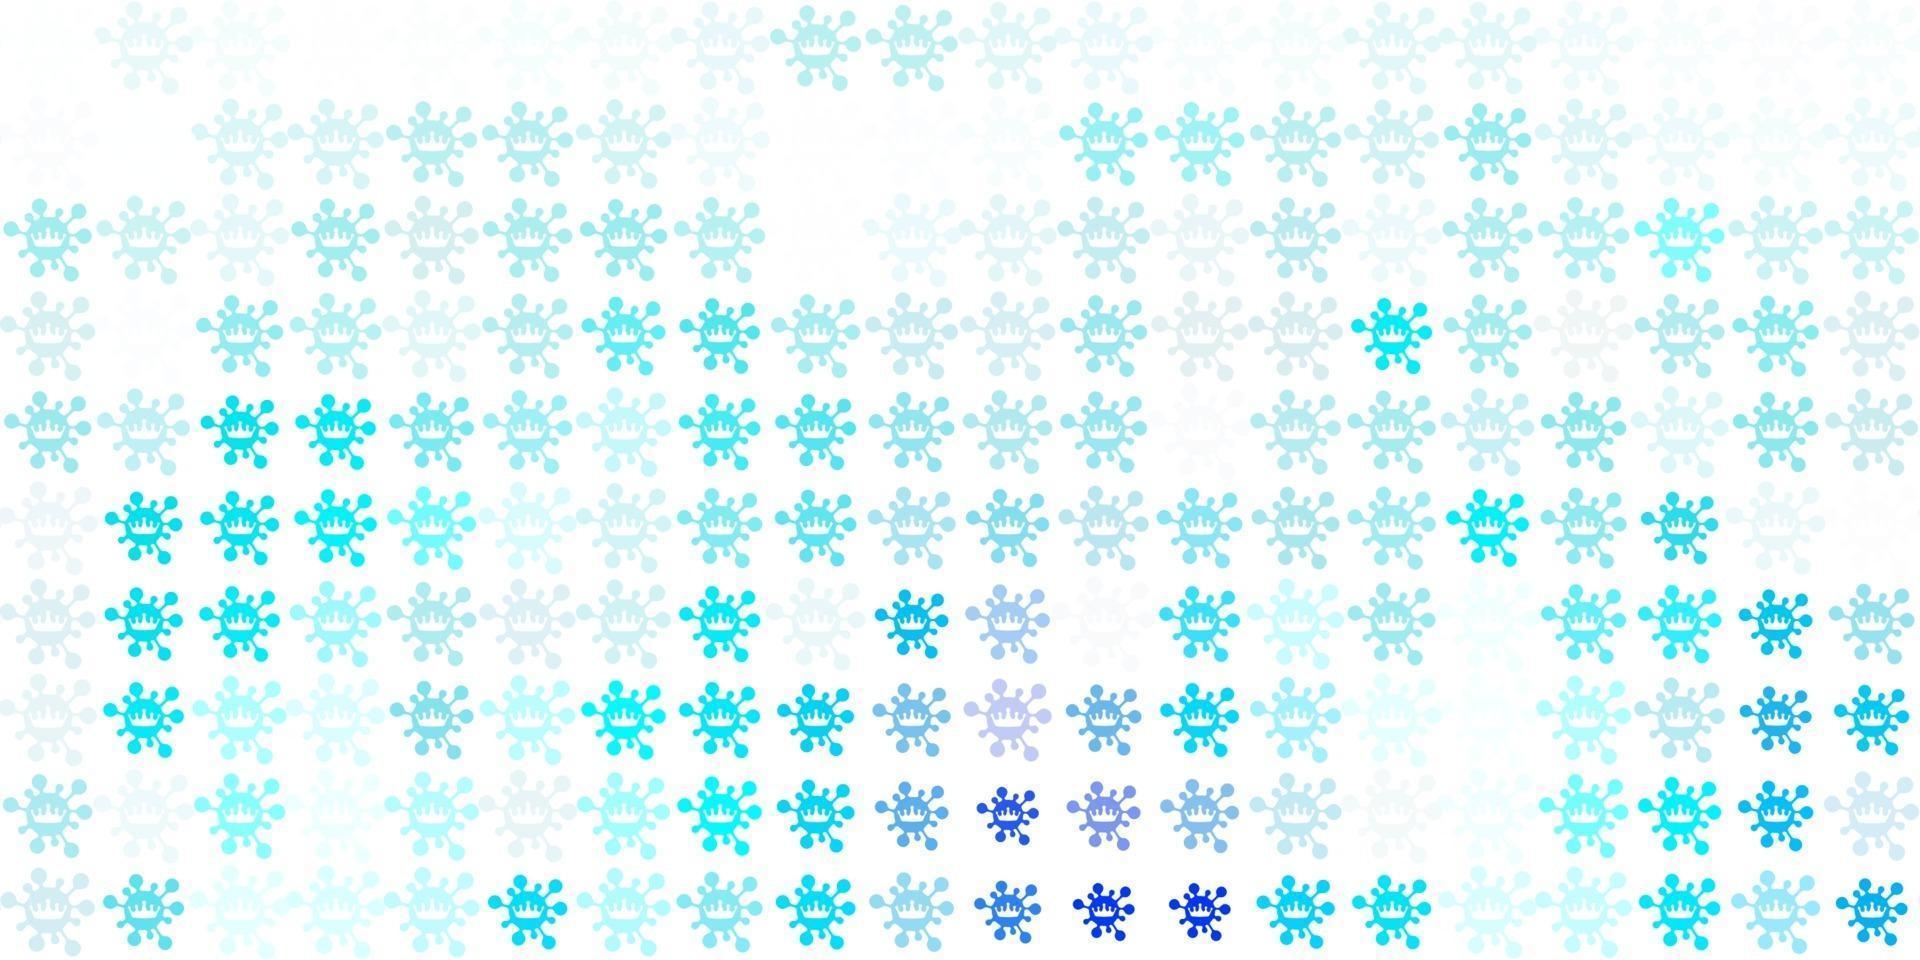 texture de vecteur bleu clair avec des symboles de la maladie.